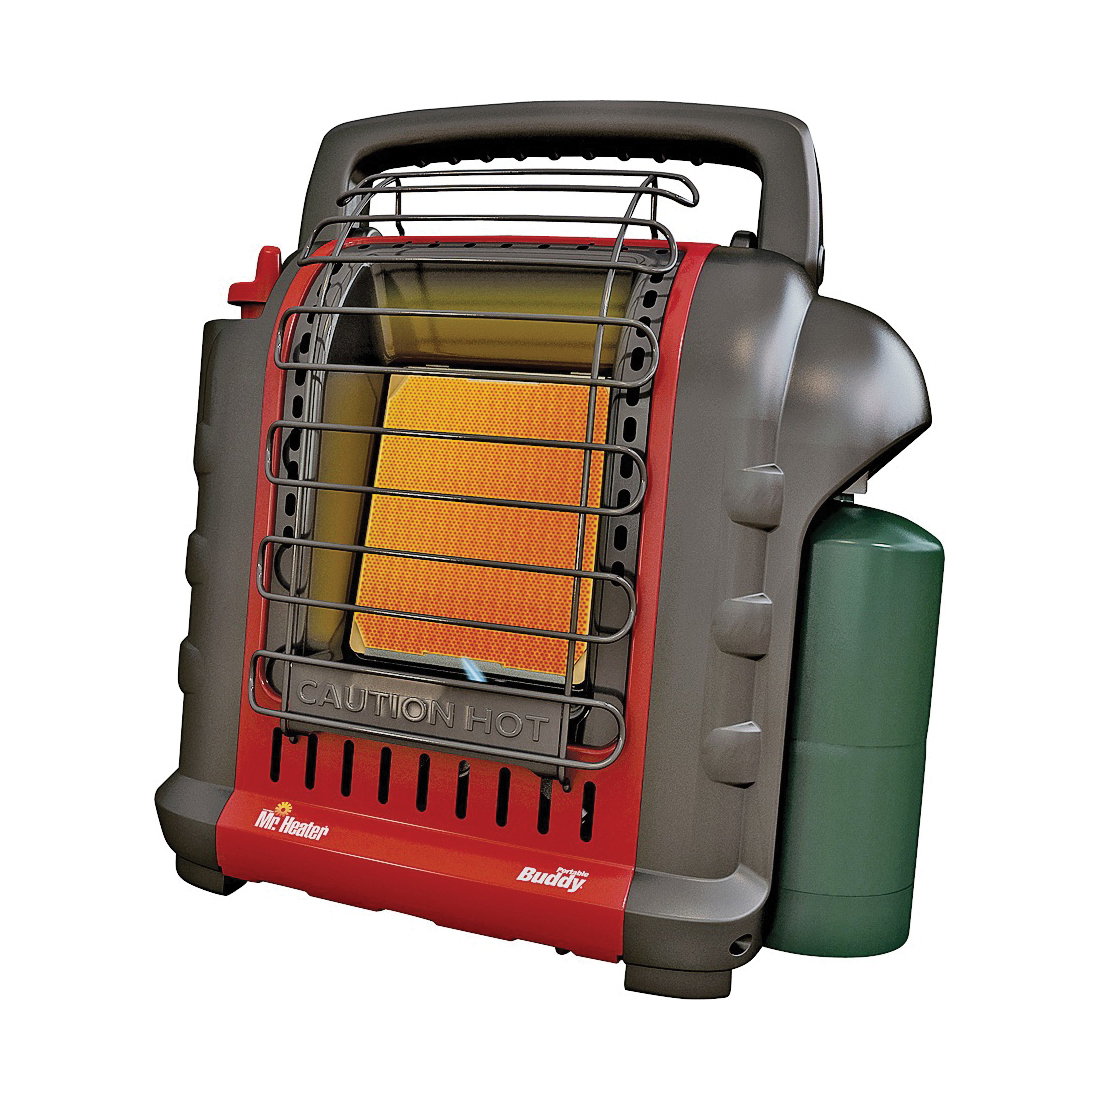 Mr. Heater F232000 Portable Buddy Heater, 9 in W, 15 in H, 4000, 9000 Btu Heating, Propane, Gray/Red